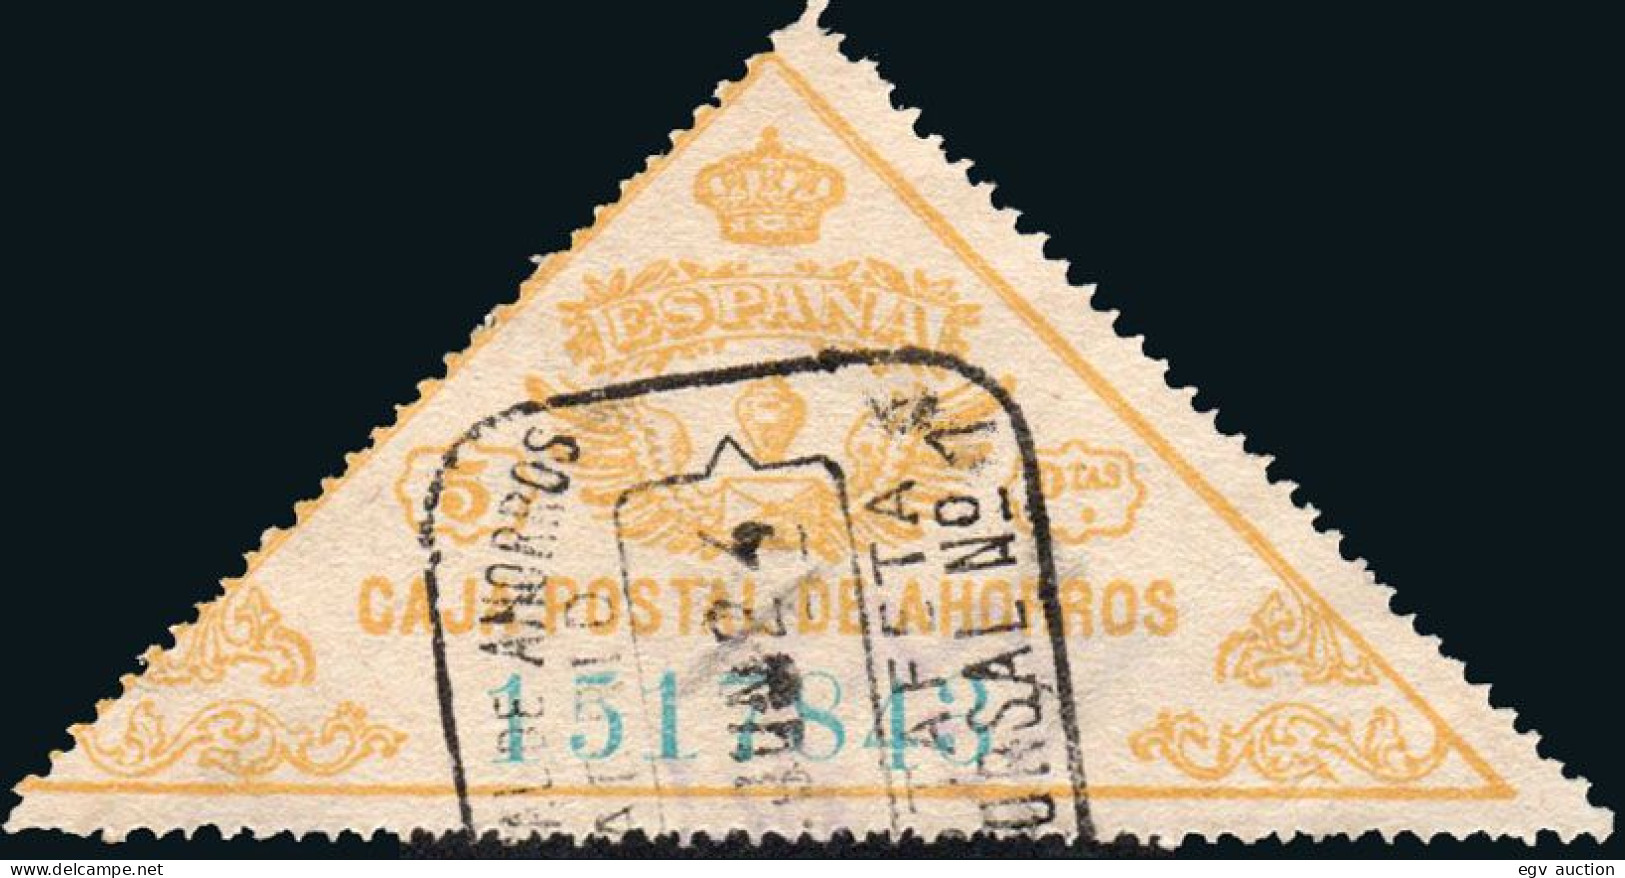 Madrid - Caja Postal Ahorros - Gálvez O 5 - Mat "Estafeta Sucursal N.º 1 - Caja Postal Ahorros" - Fiscaux